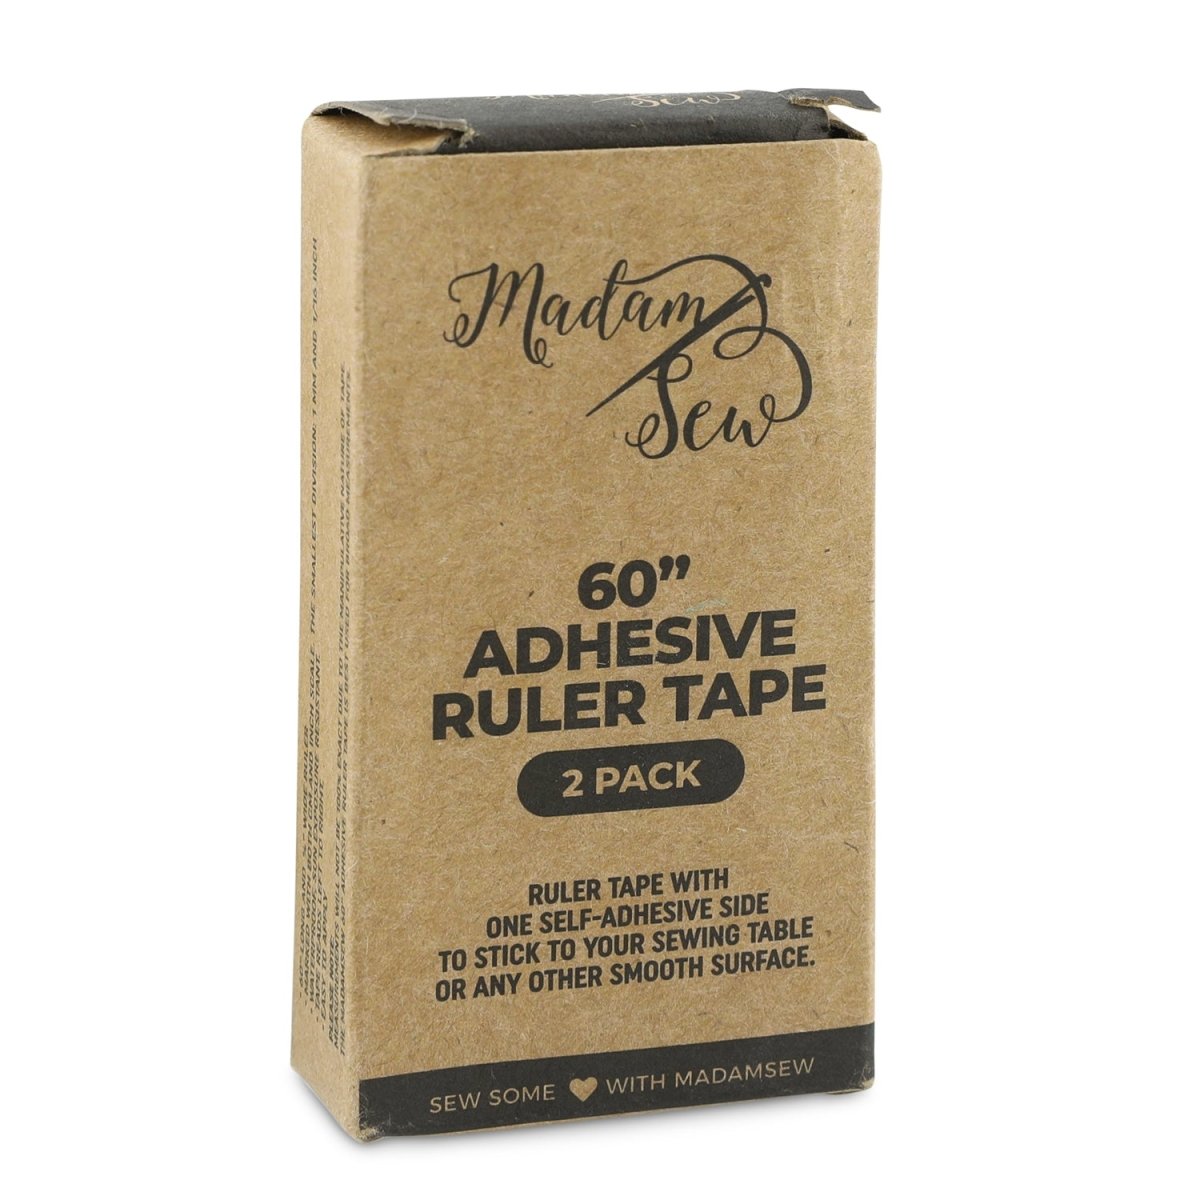 MadamSew Adhesive Ruler Tape in Box